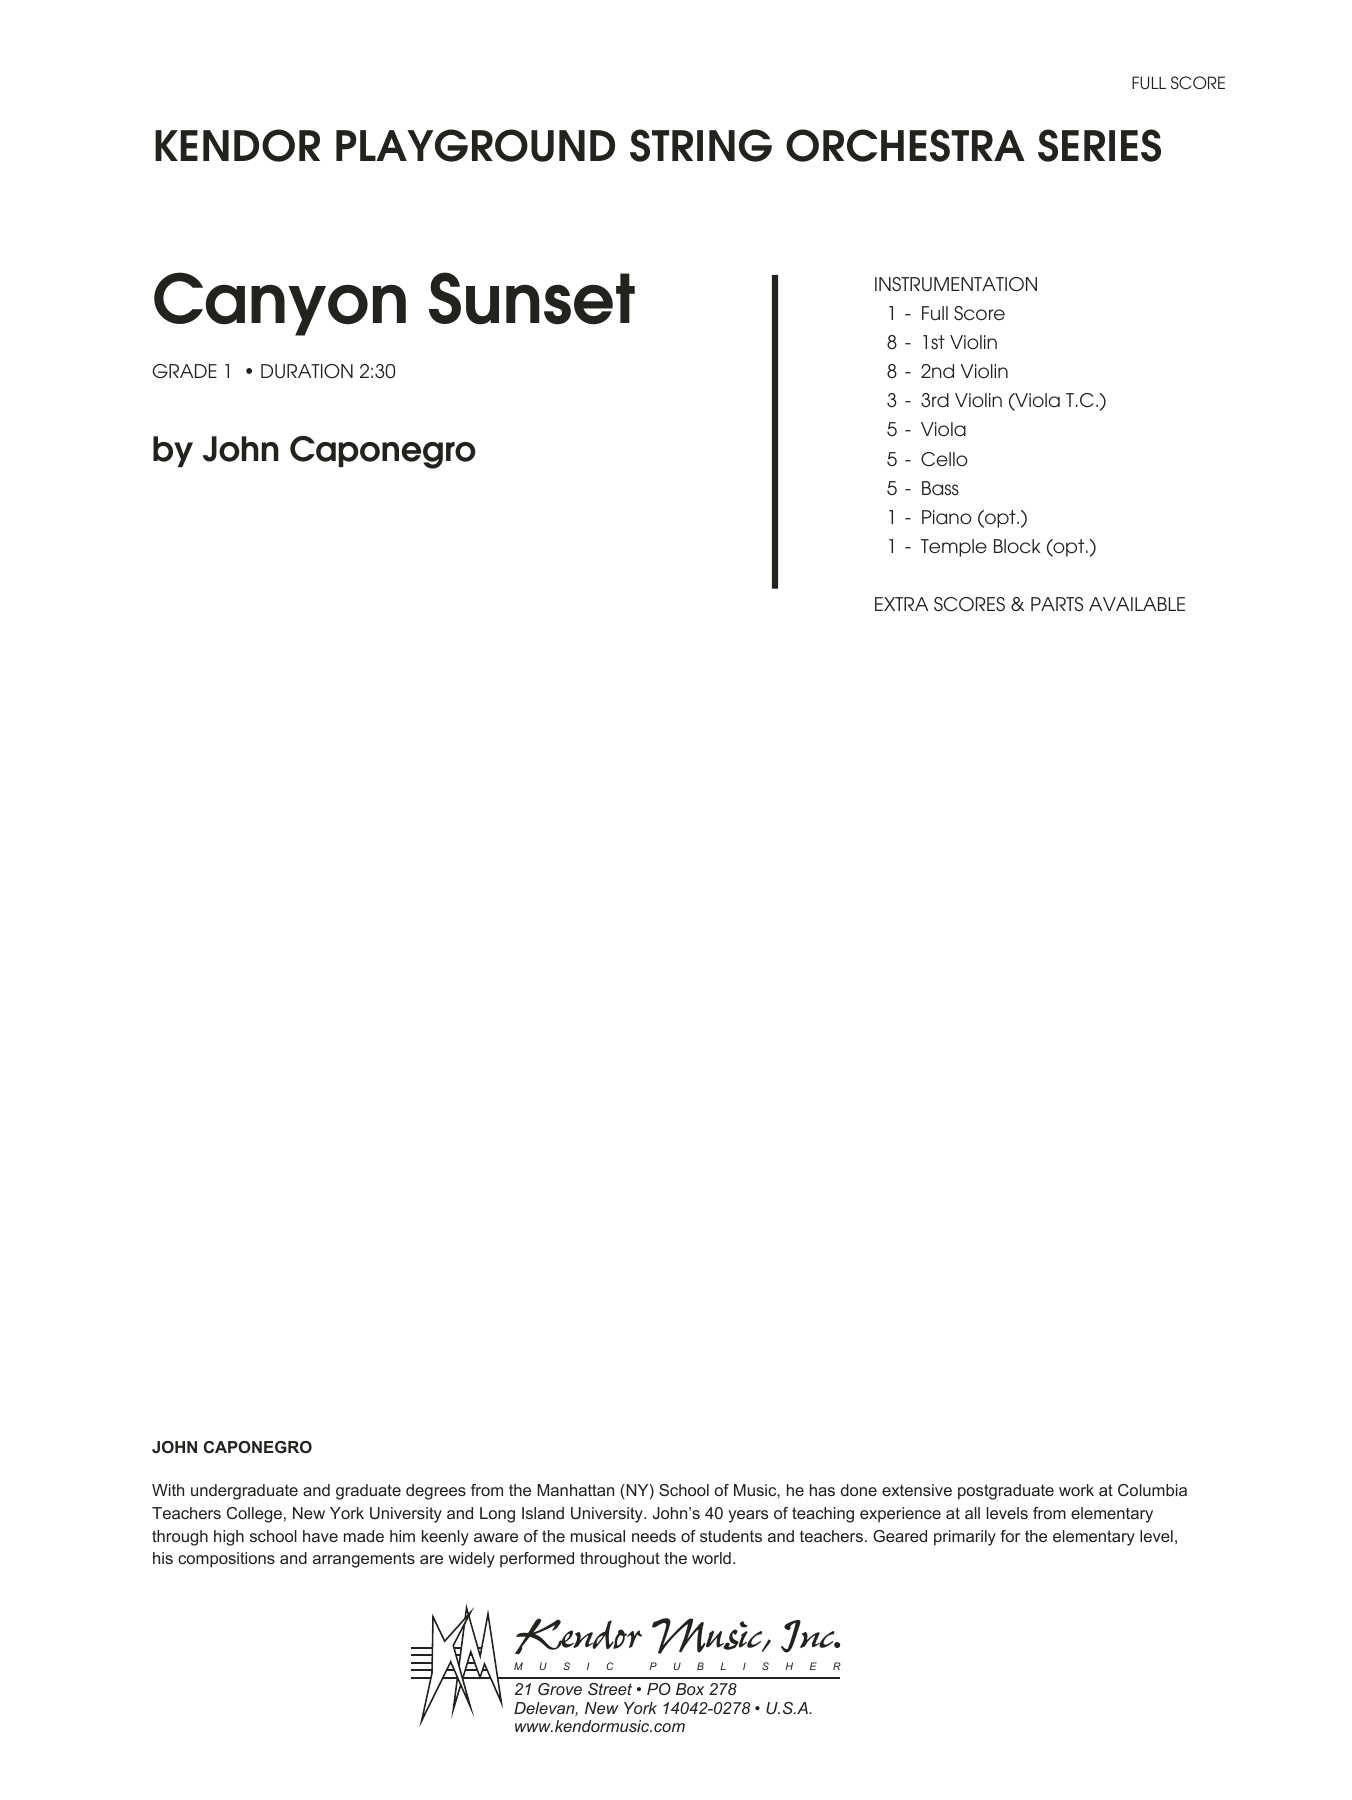 Download John Caponegro Canyon Sunset - Full Score Sheet Music